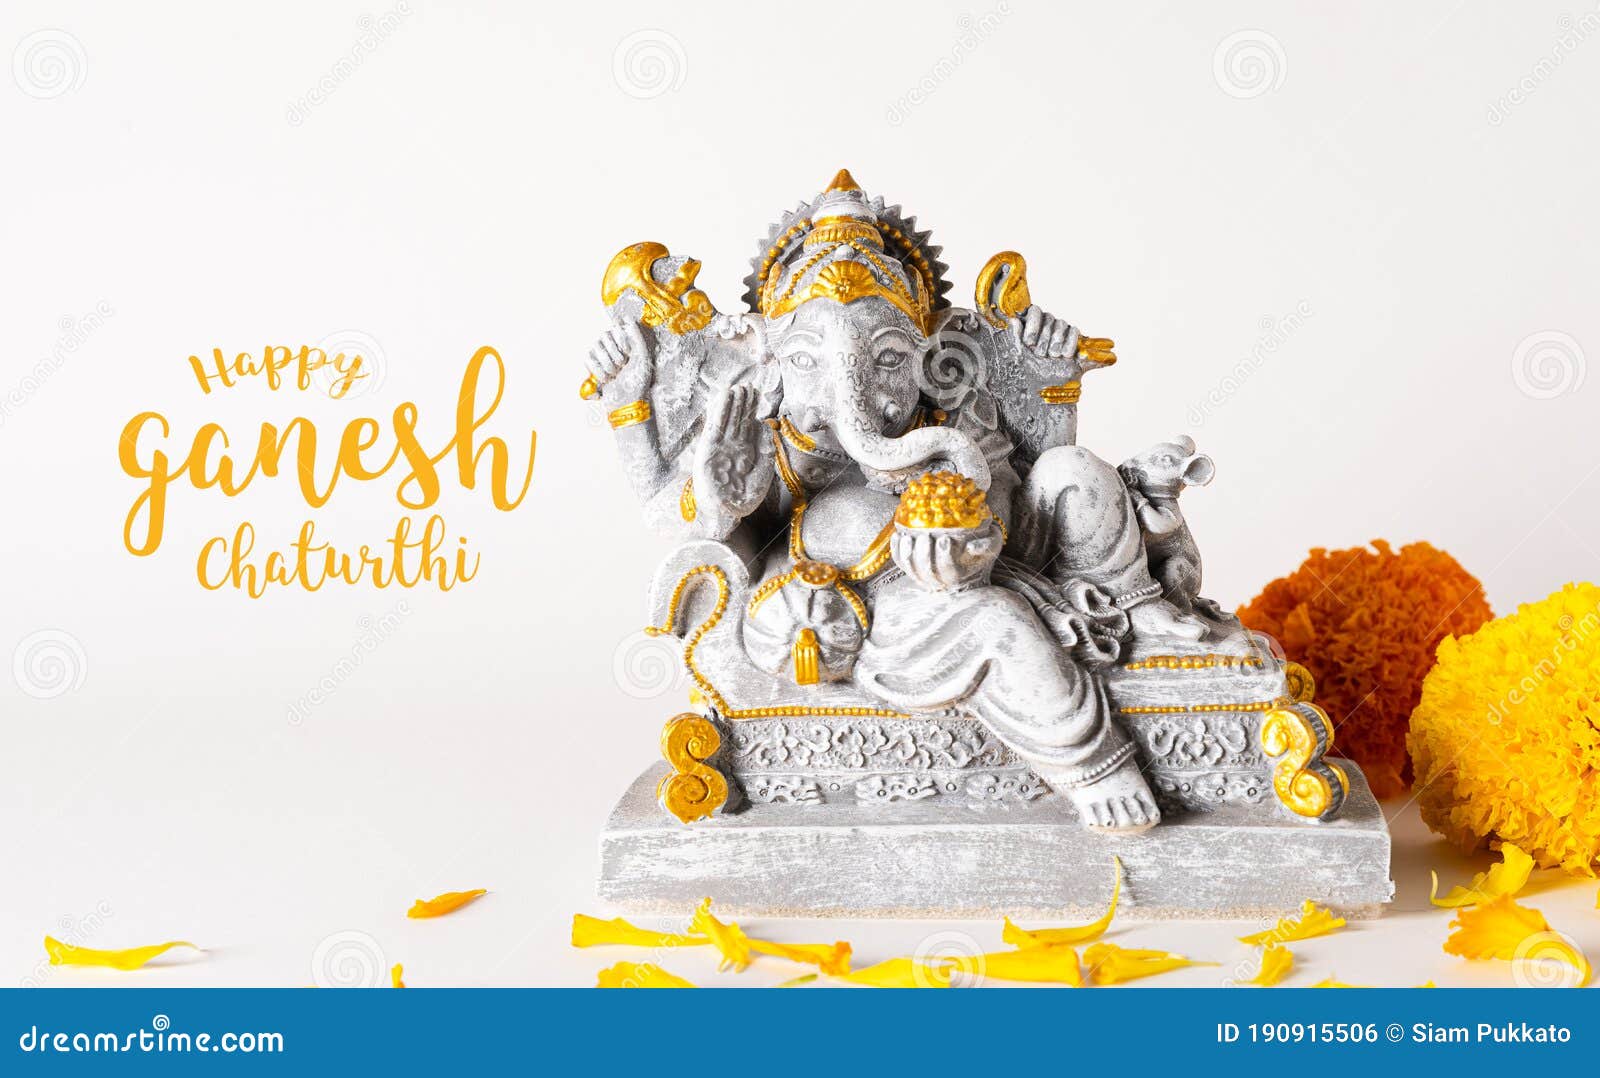 Happy Ganesh Chaturthi Festival, Lord Ganesha Statue with ...